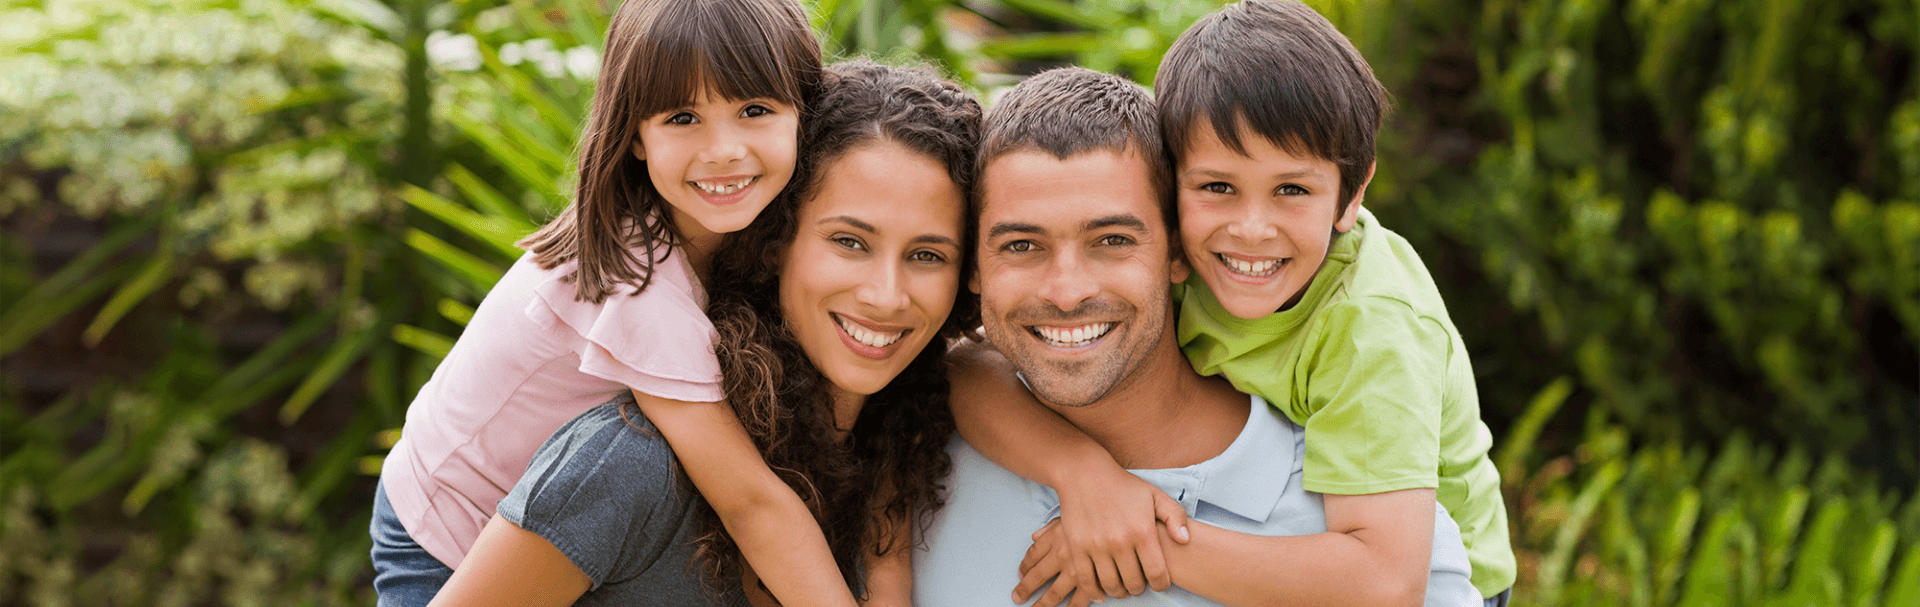 You SE Calgary Choice for Family & General Dentistry | Evershine Dental Care | Family & General Dentist | SE Calgary